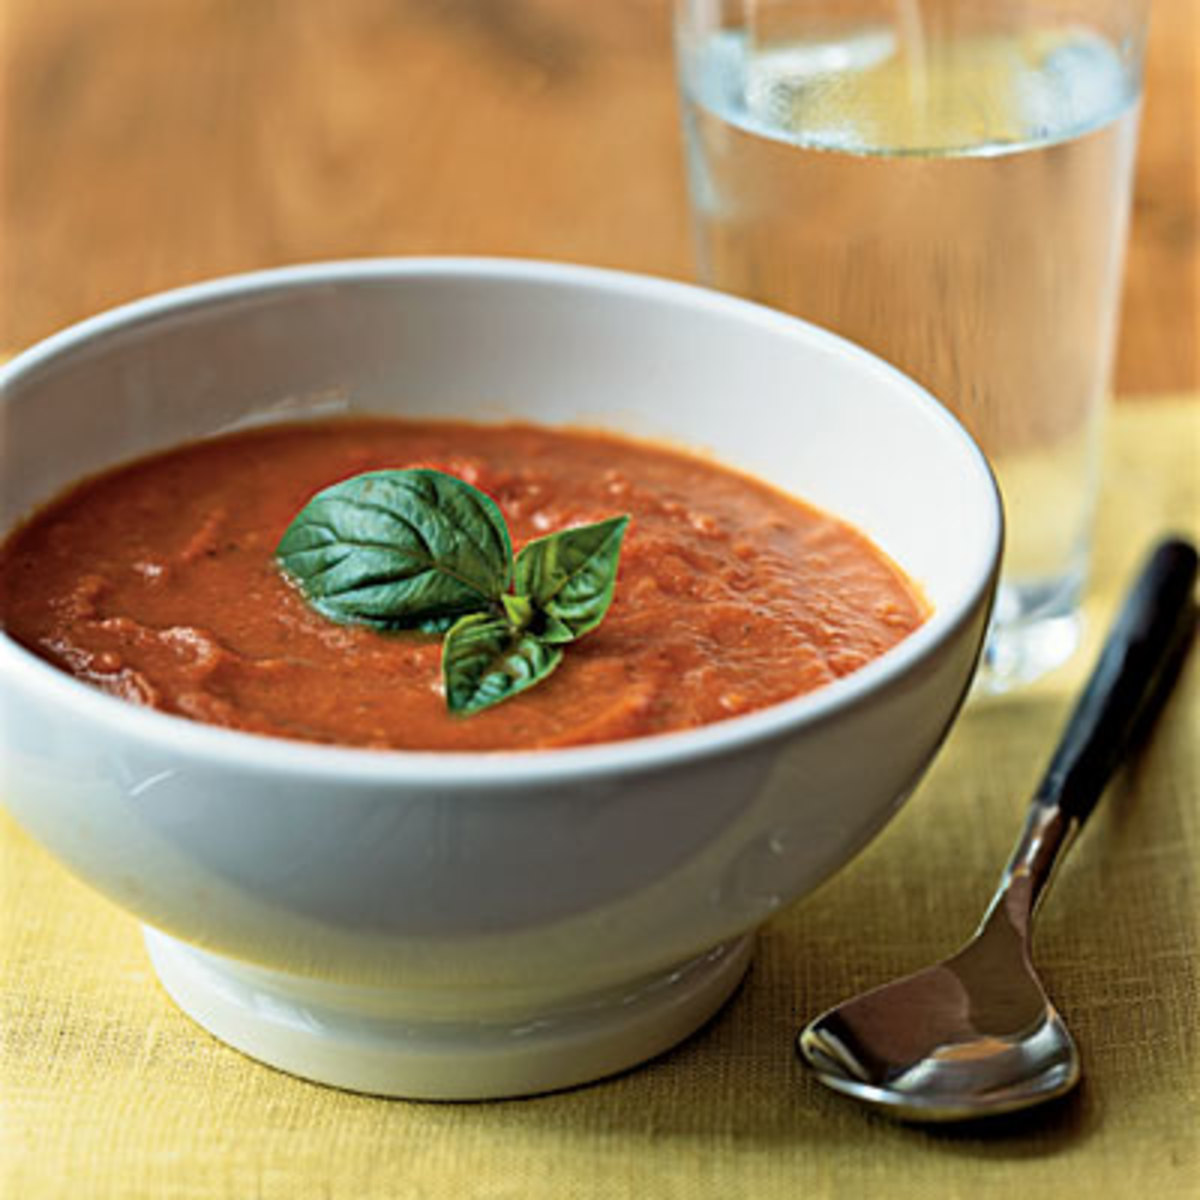 Applebee’s Tomato Basil Soup Recipe from fresh tomatoes.